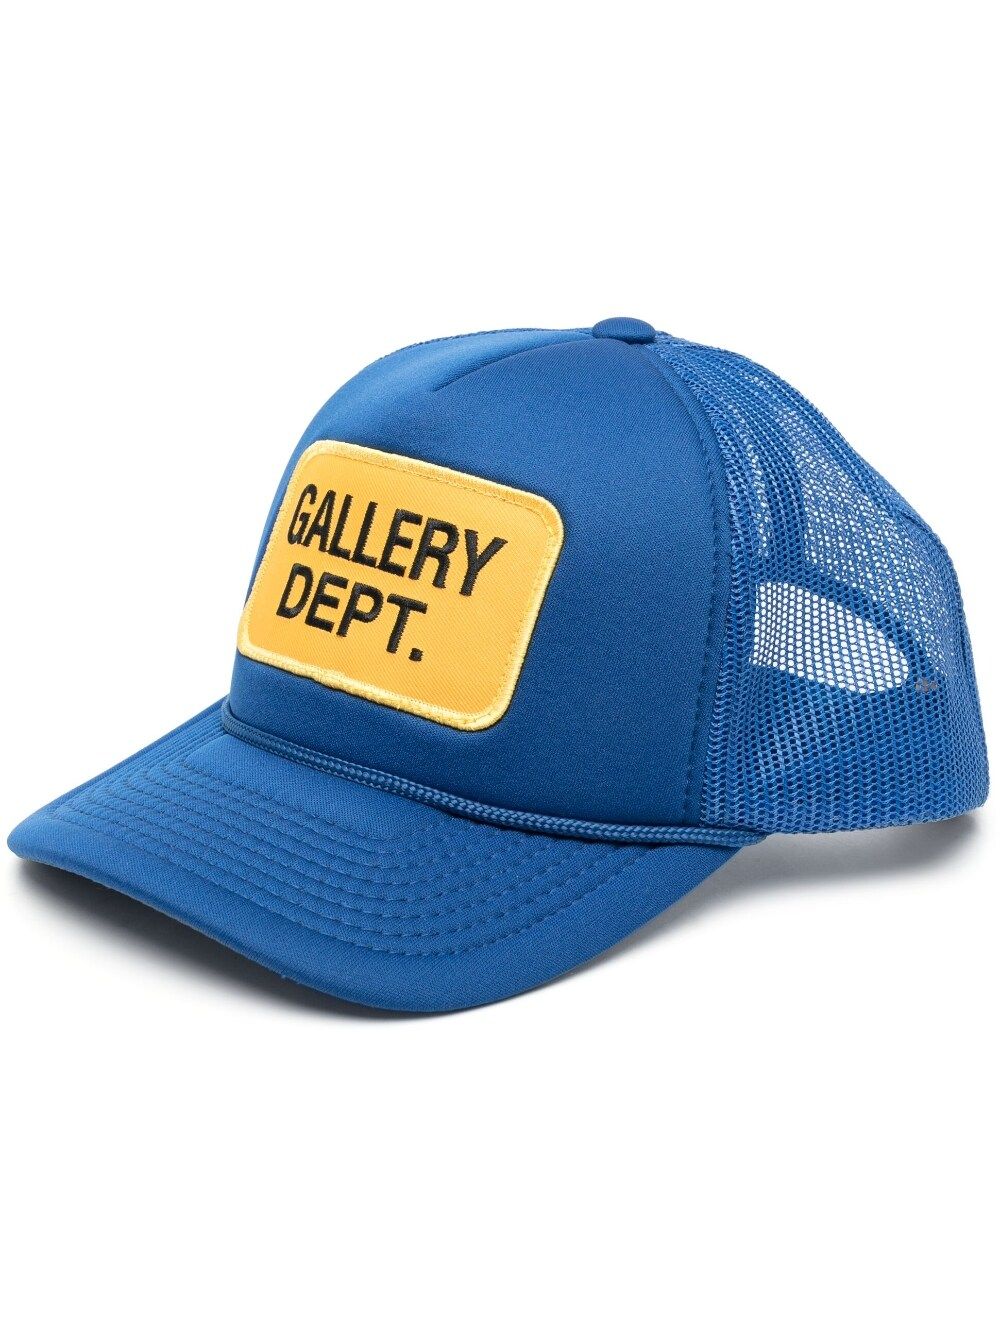 embroidered-logo trucker cap | GALLERY DEPT. | Eraldo.com